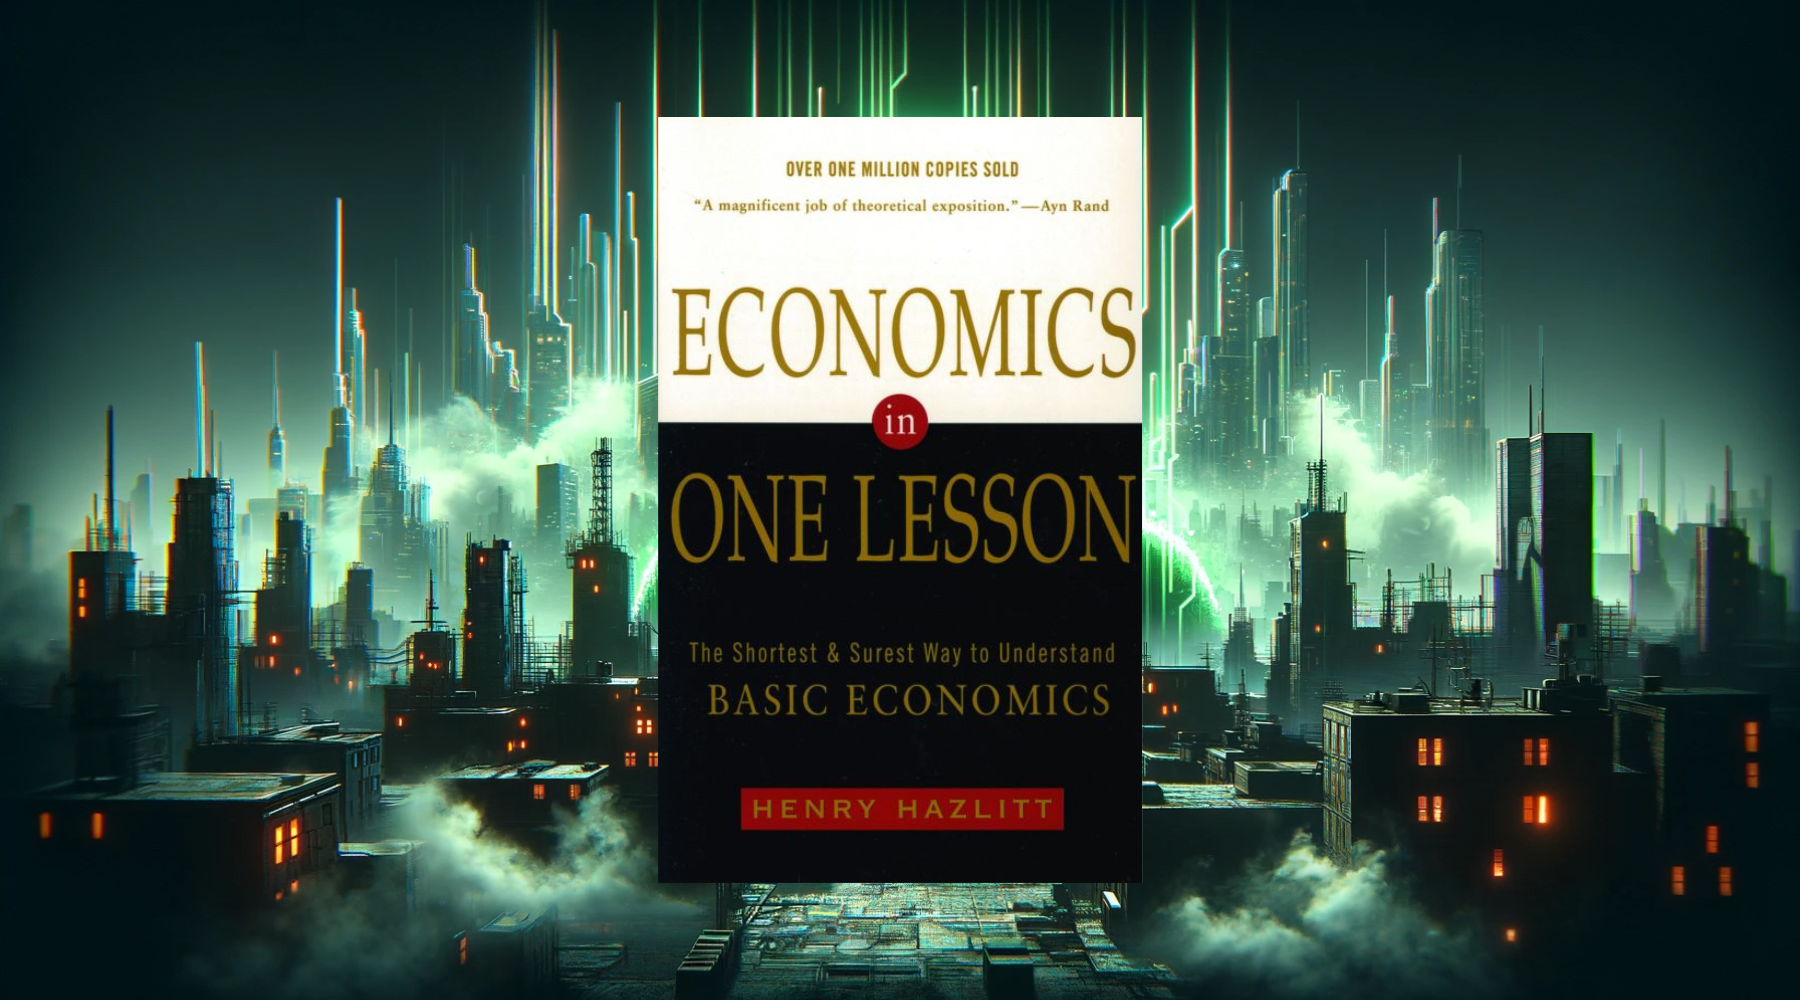 Economics in One Lesson Book Summary